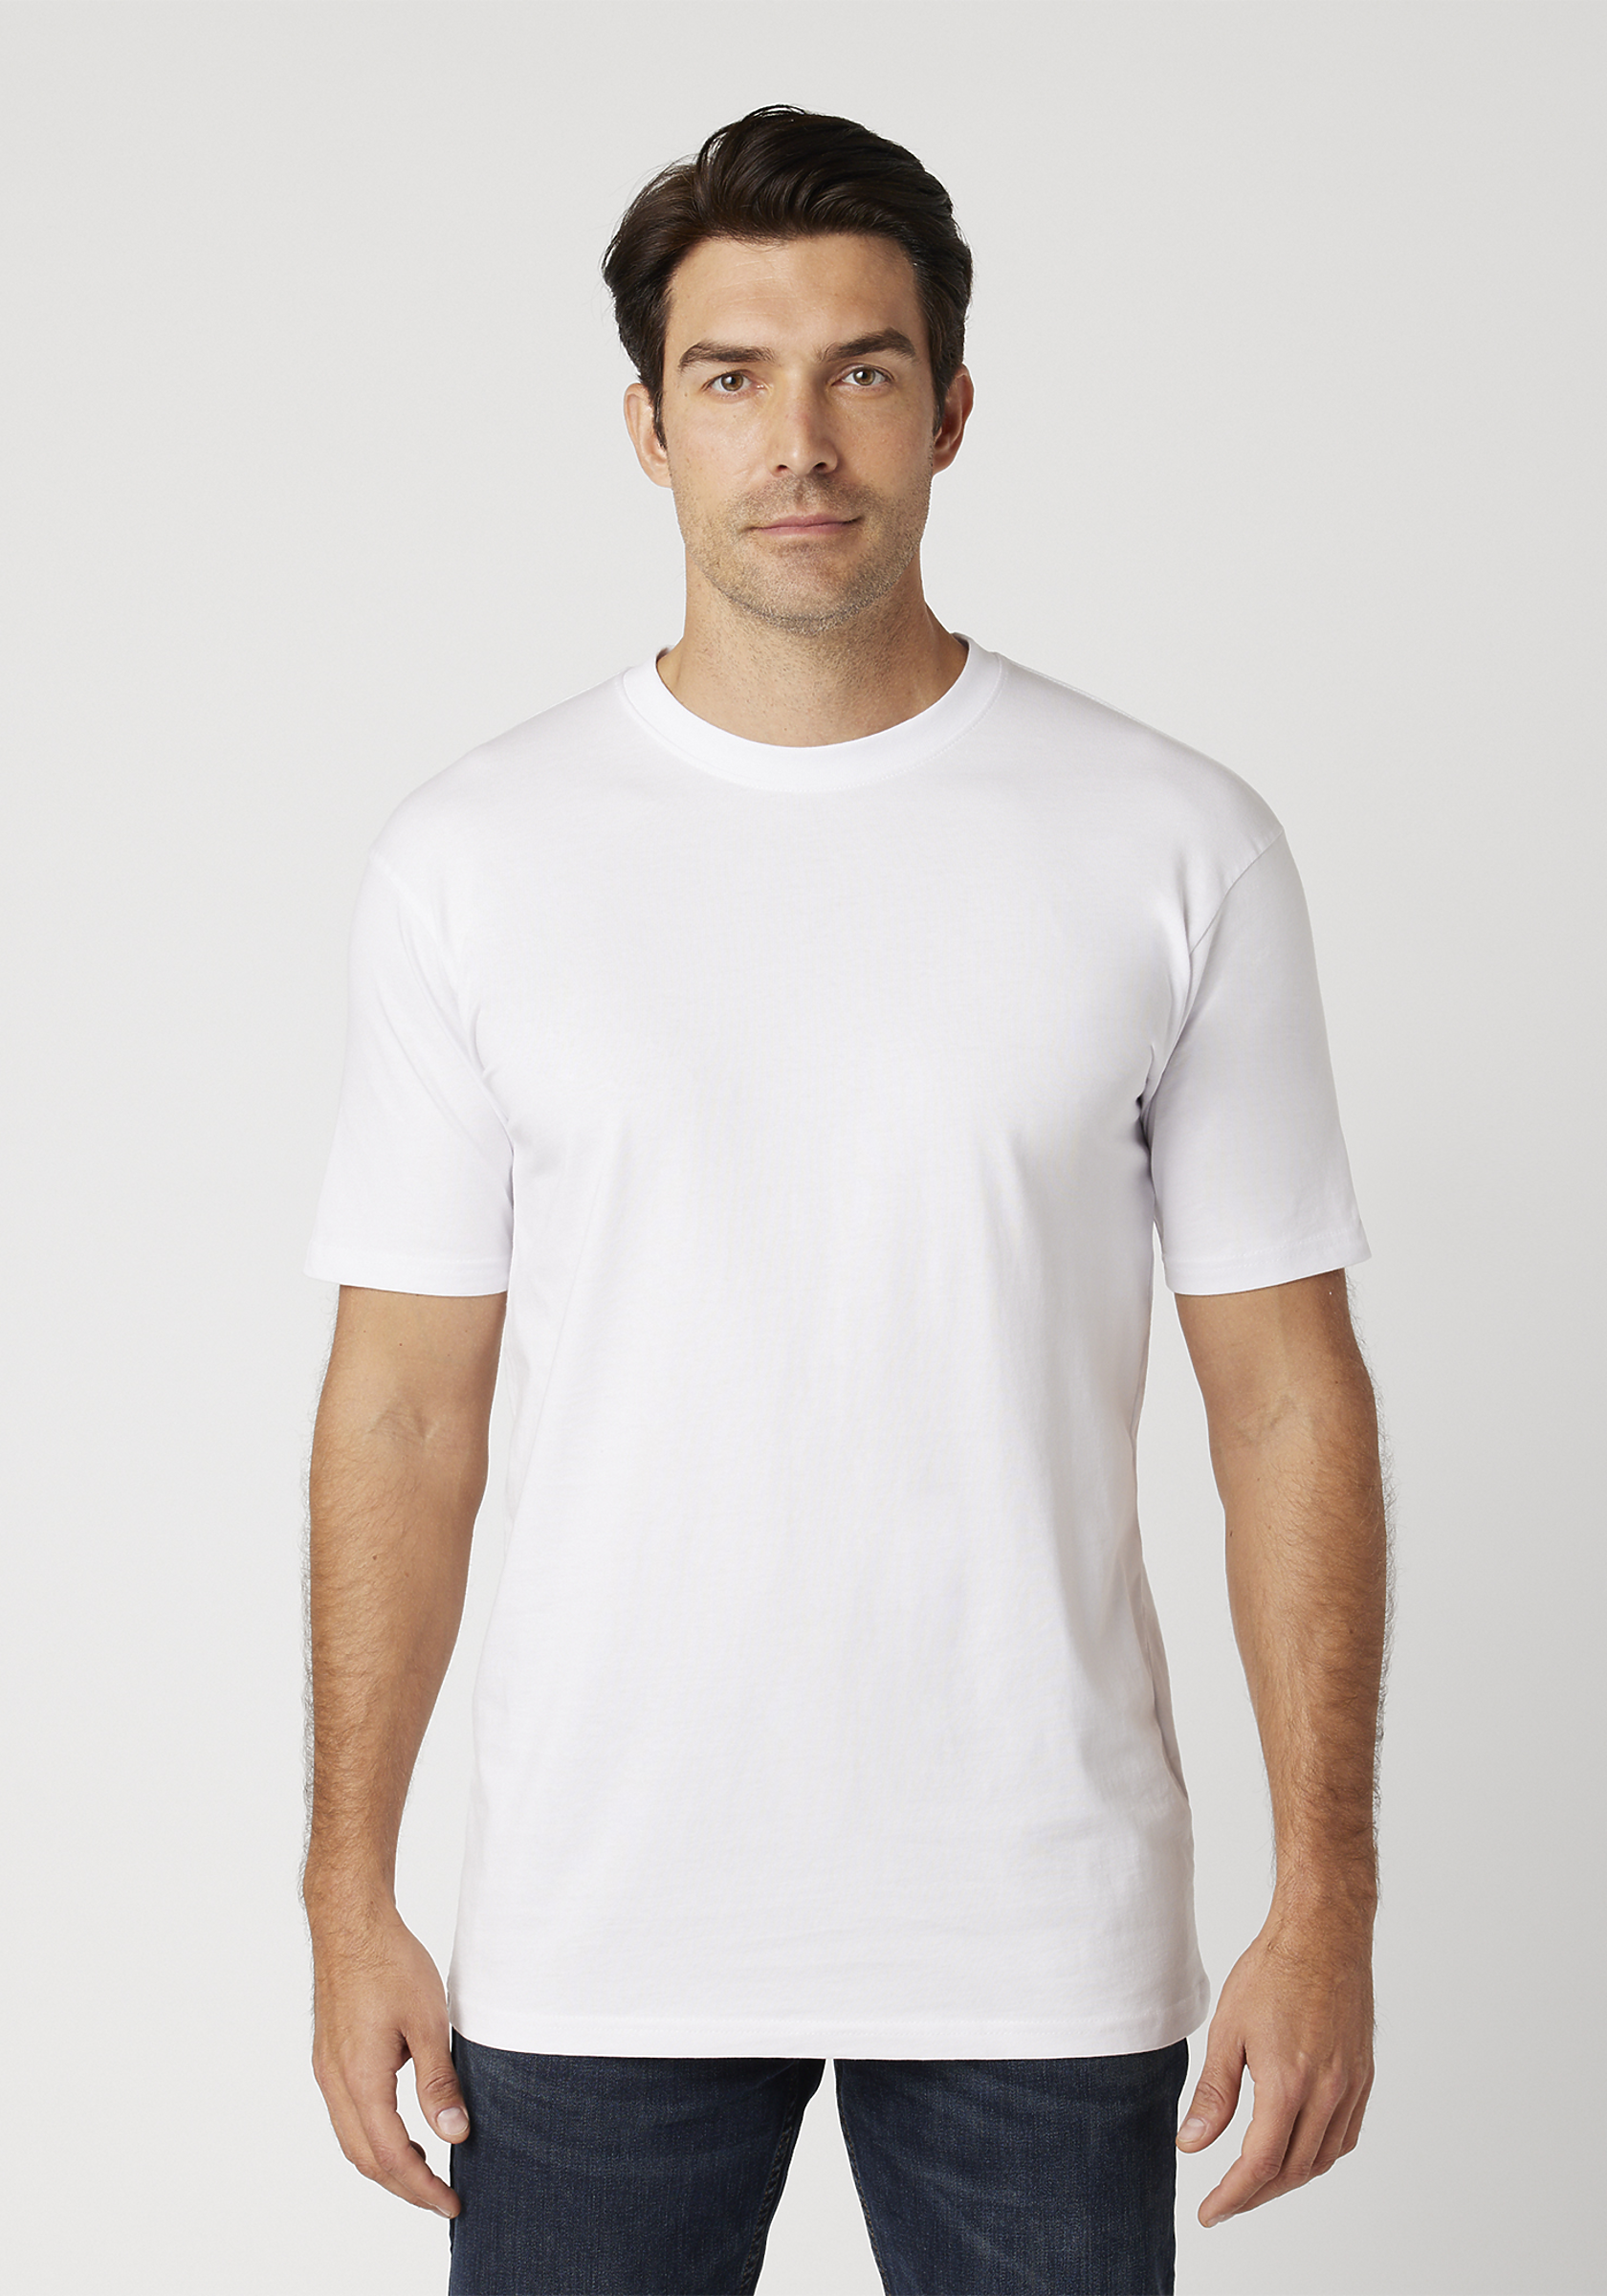 cotton division T-Shirt Uomo 